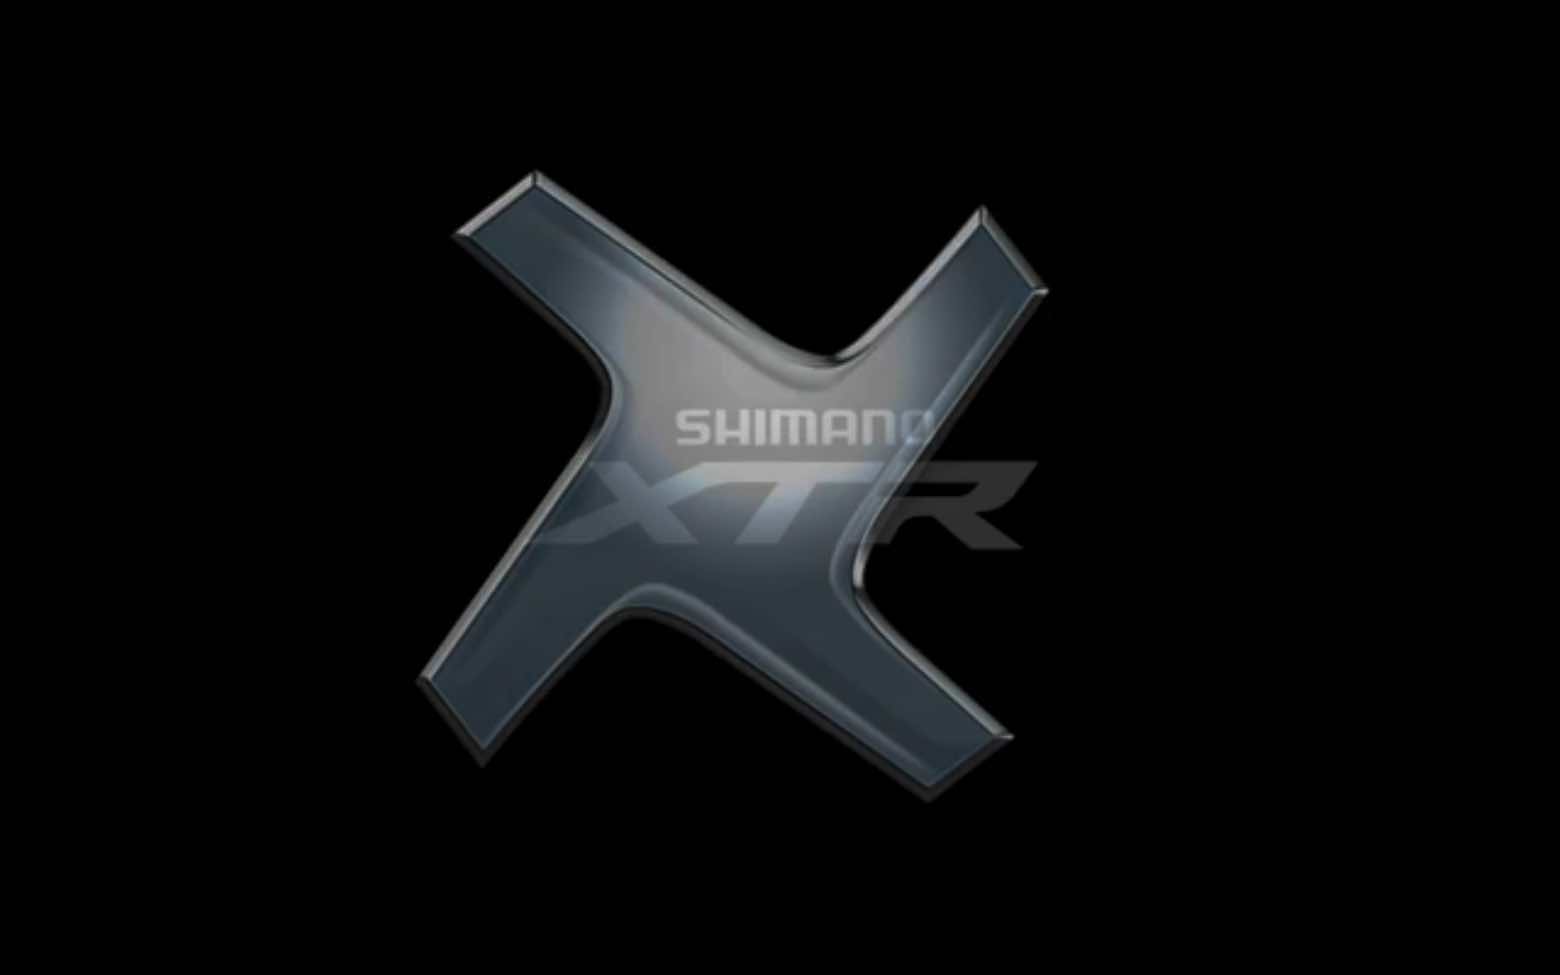 Shimano - The Story of XTR main image